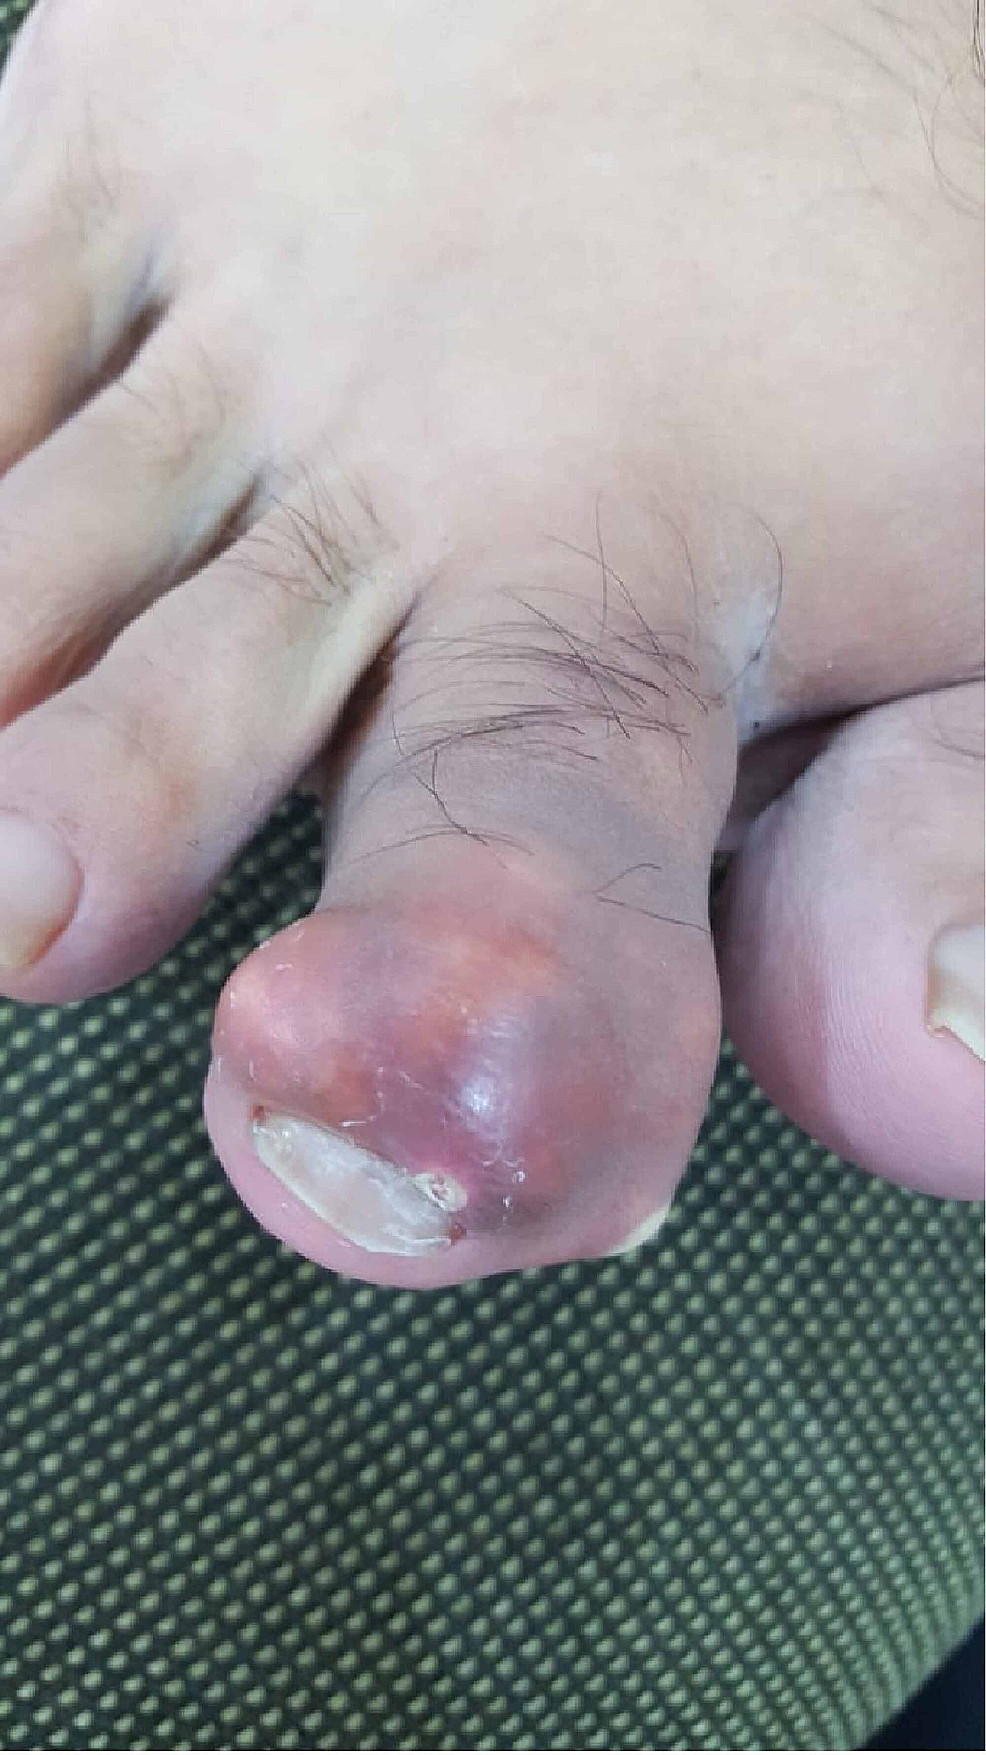 gout toe